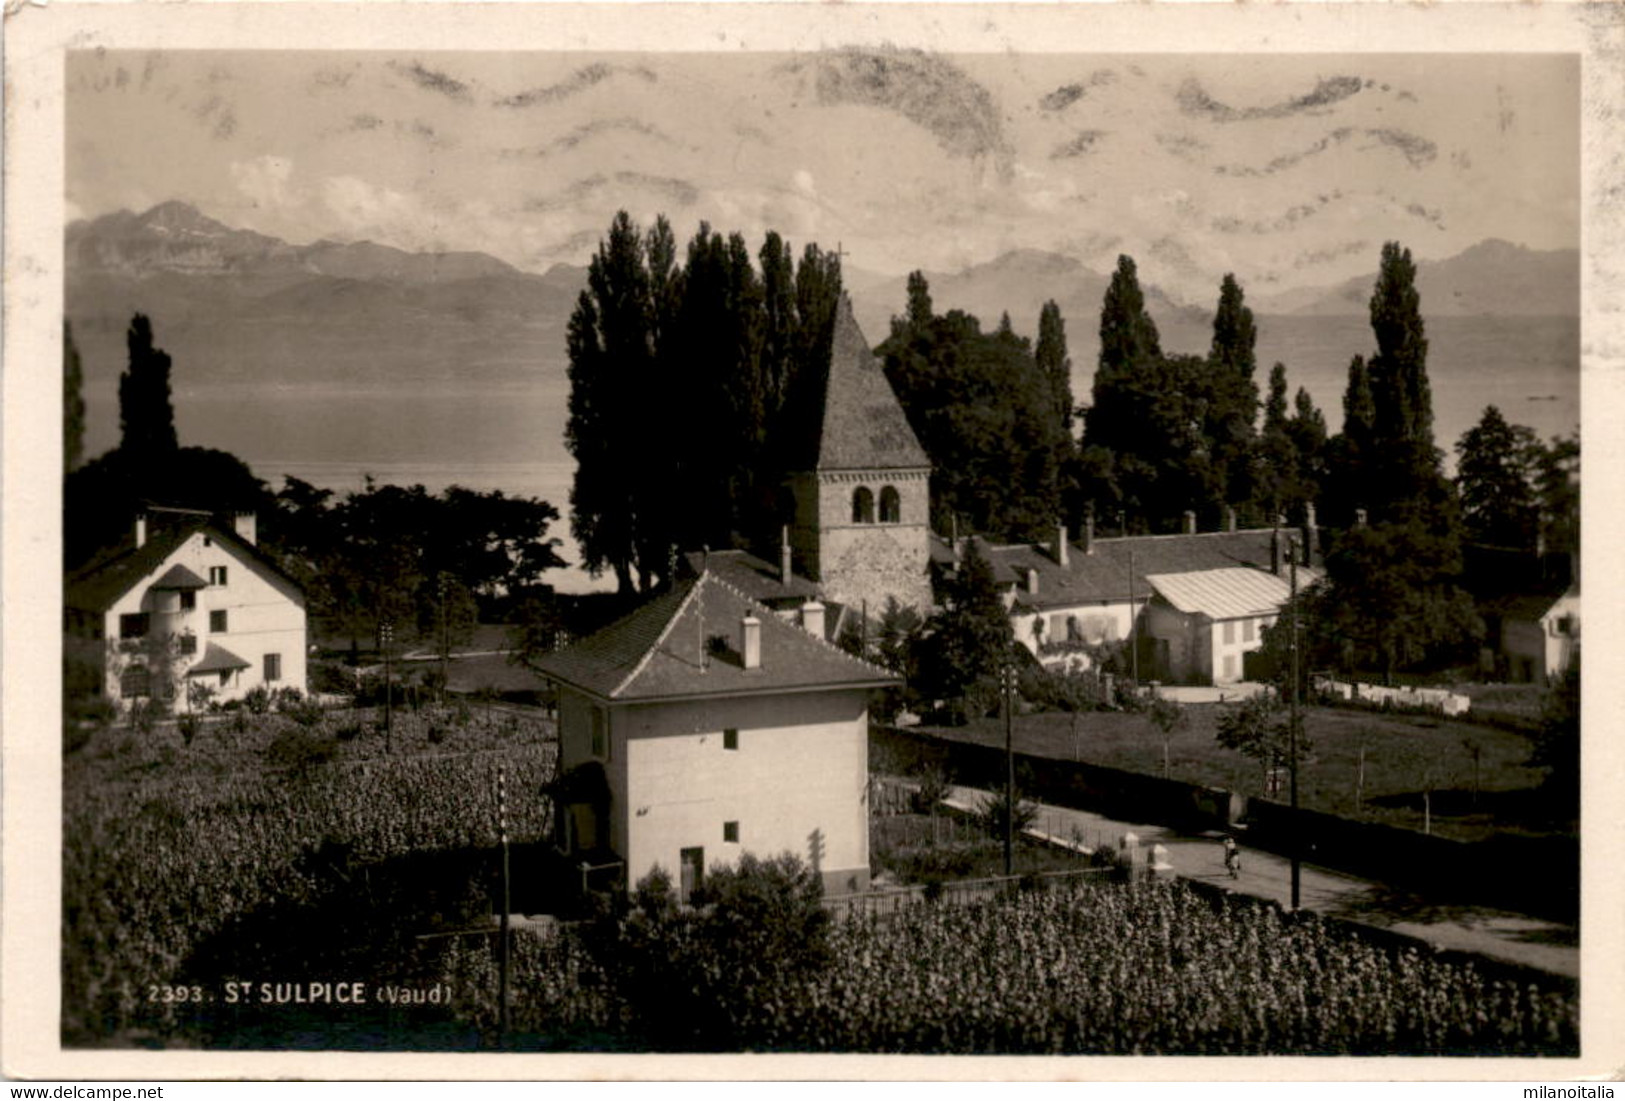 St. Sulpice (Vaud) (2393) * 8. 8. 1938 - Saint-Sulpice